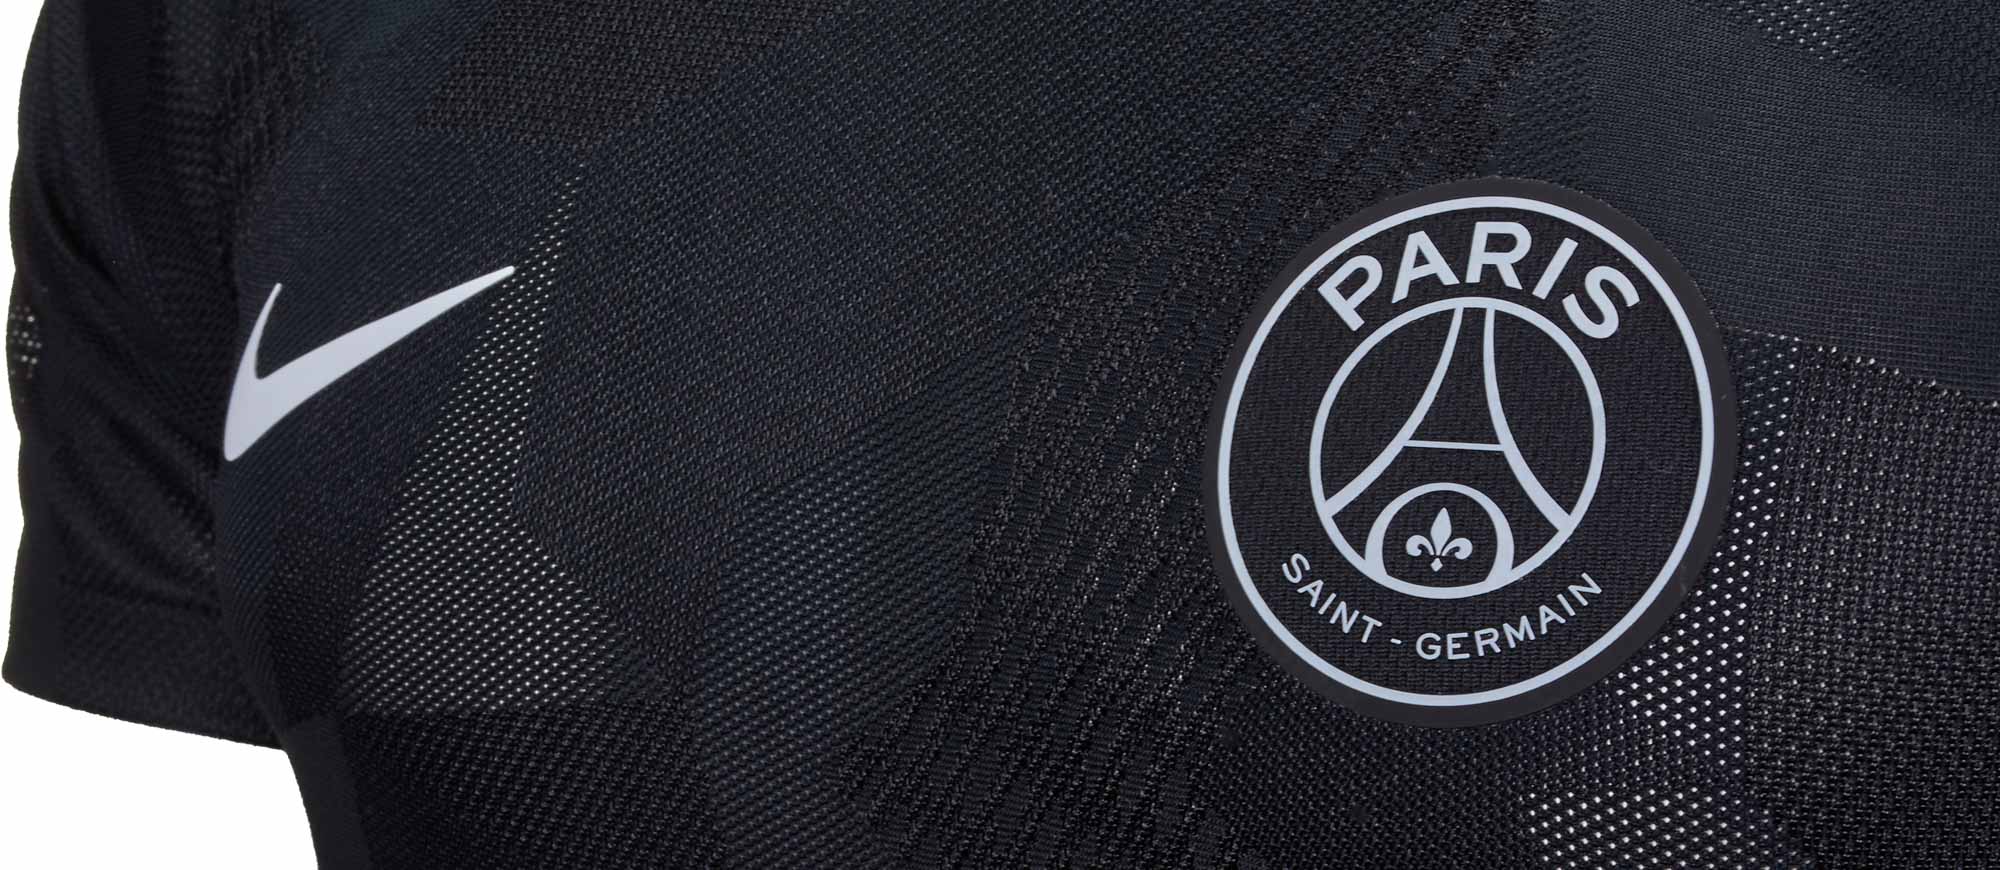 Nike launches 2017-18 PSG Third Kit